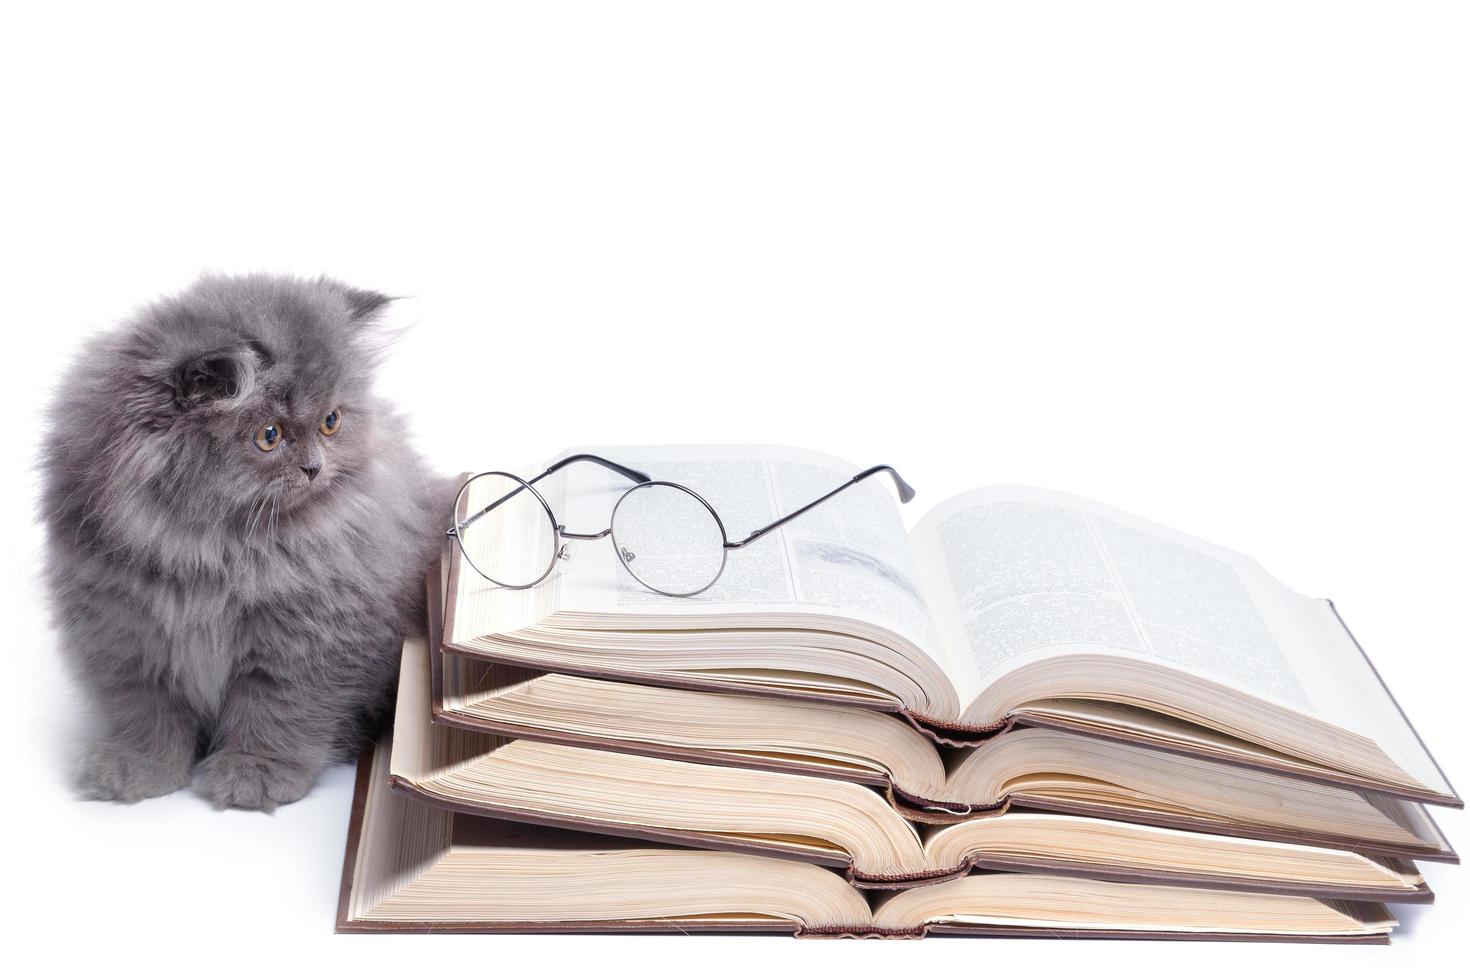 Cute little kitten and books photo